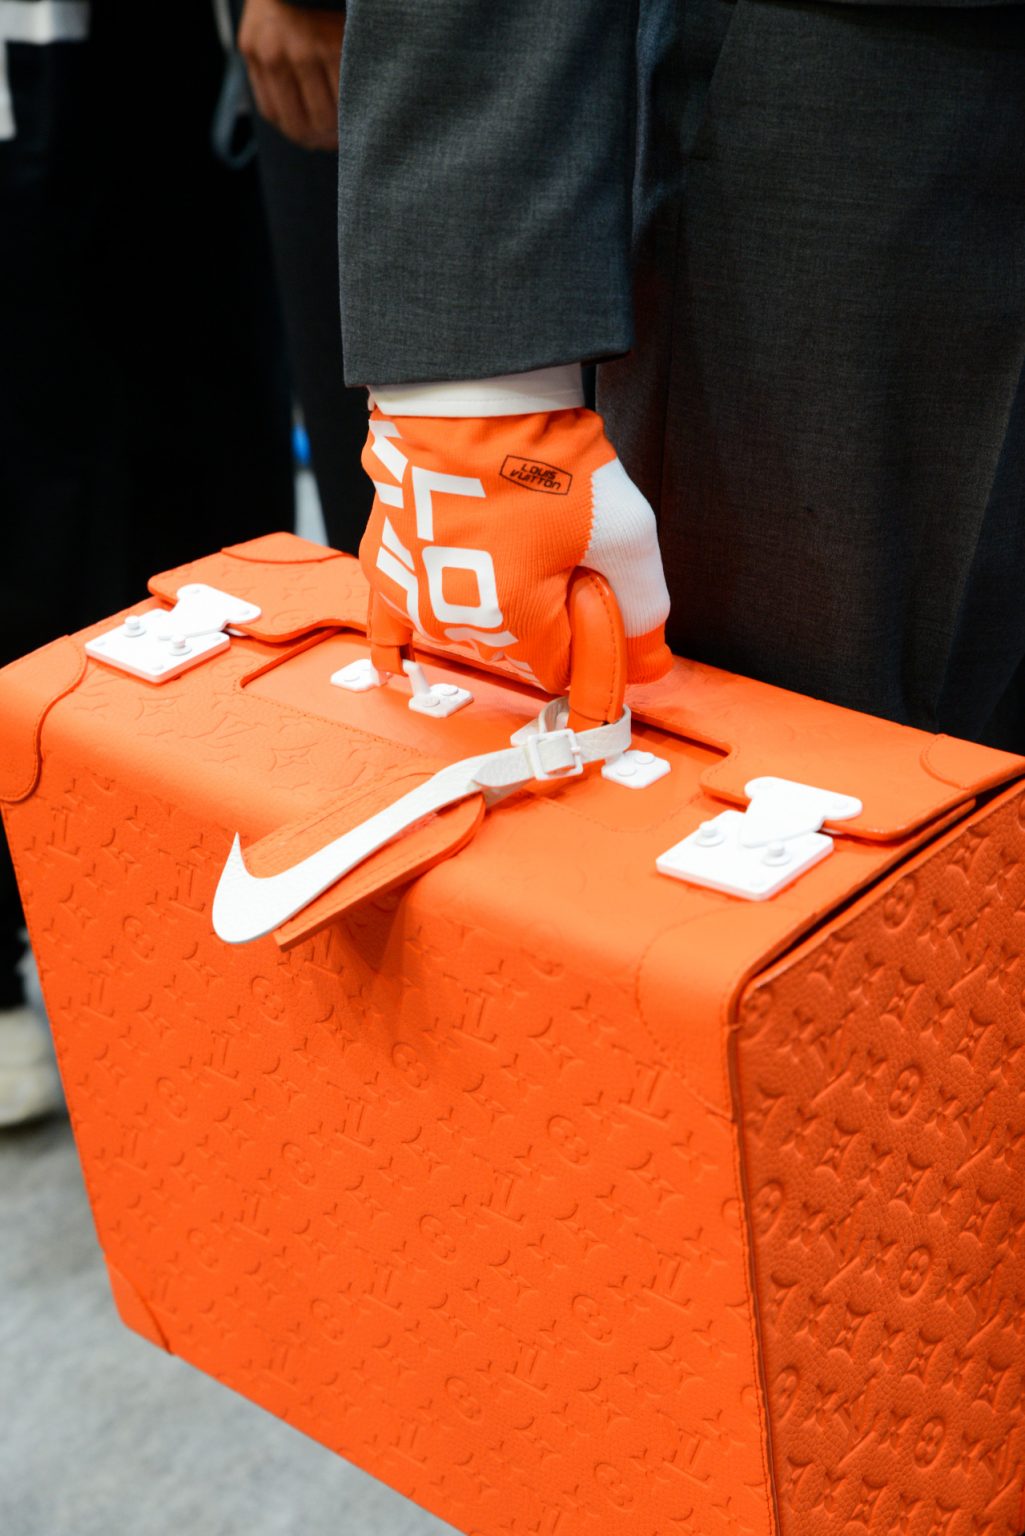 Louis Vuitton's US$39,000 airplane bag goes viral